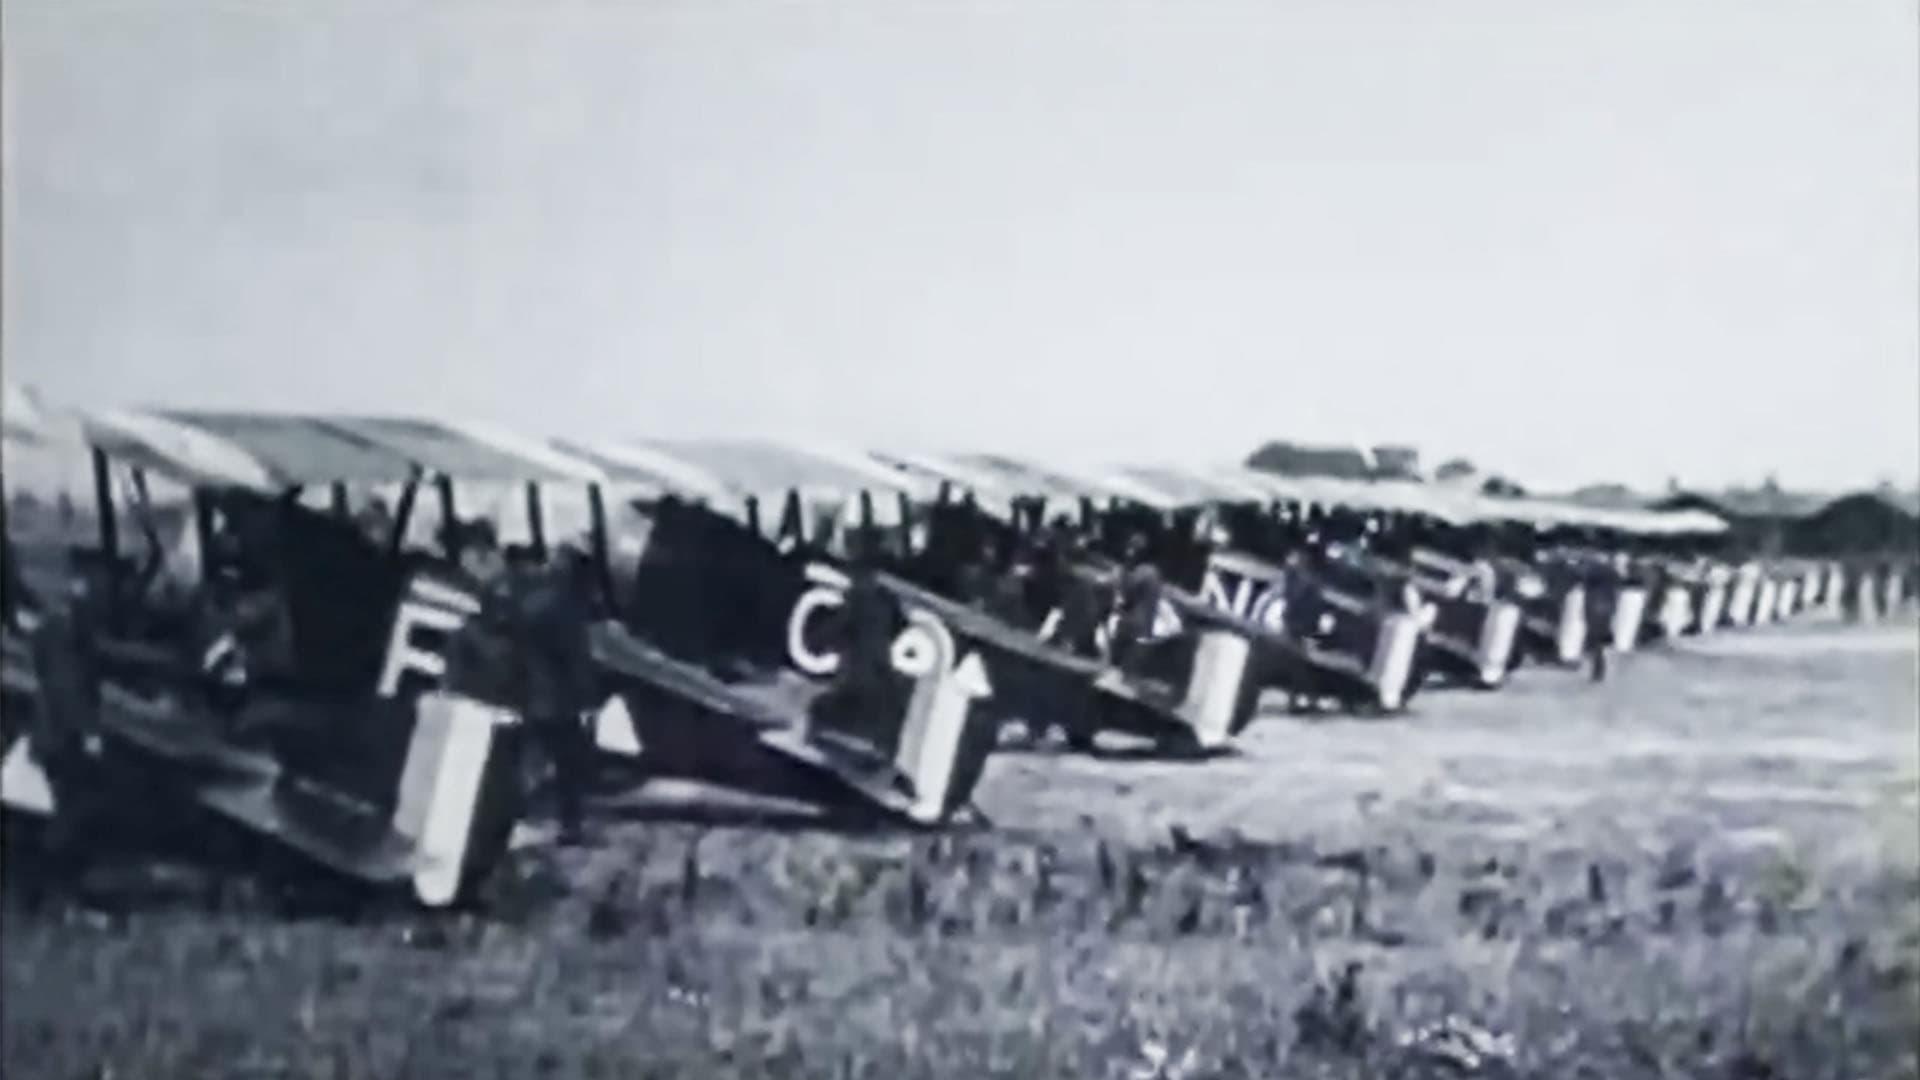 Pioneers in Aviation backdrop